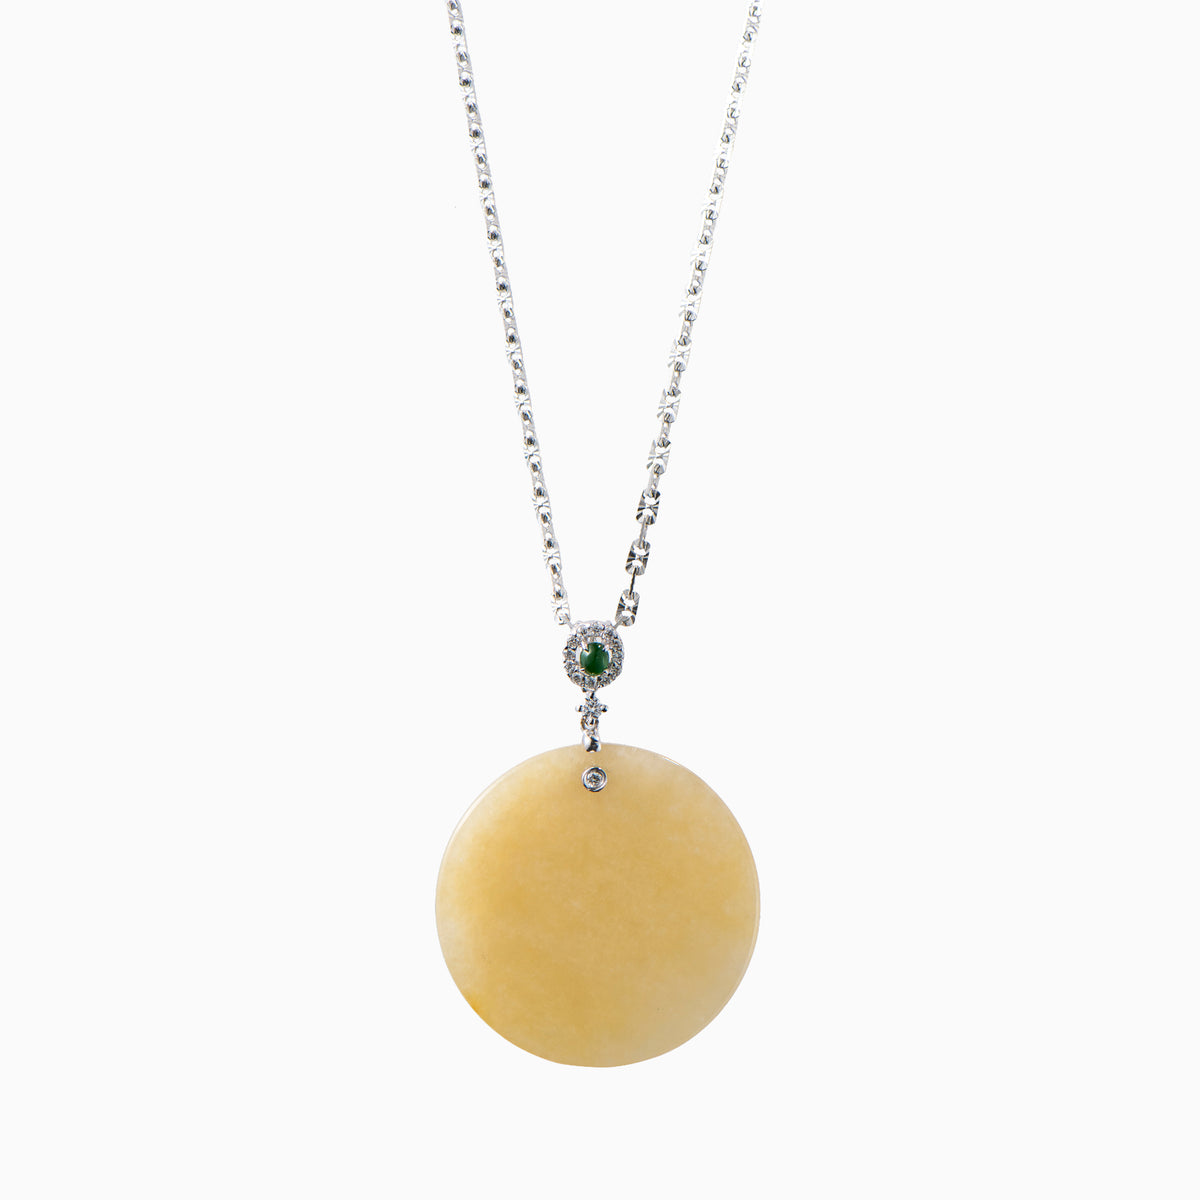 Champagne yellow jade circular pendant